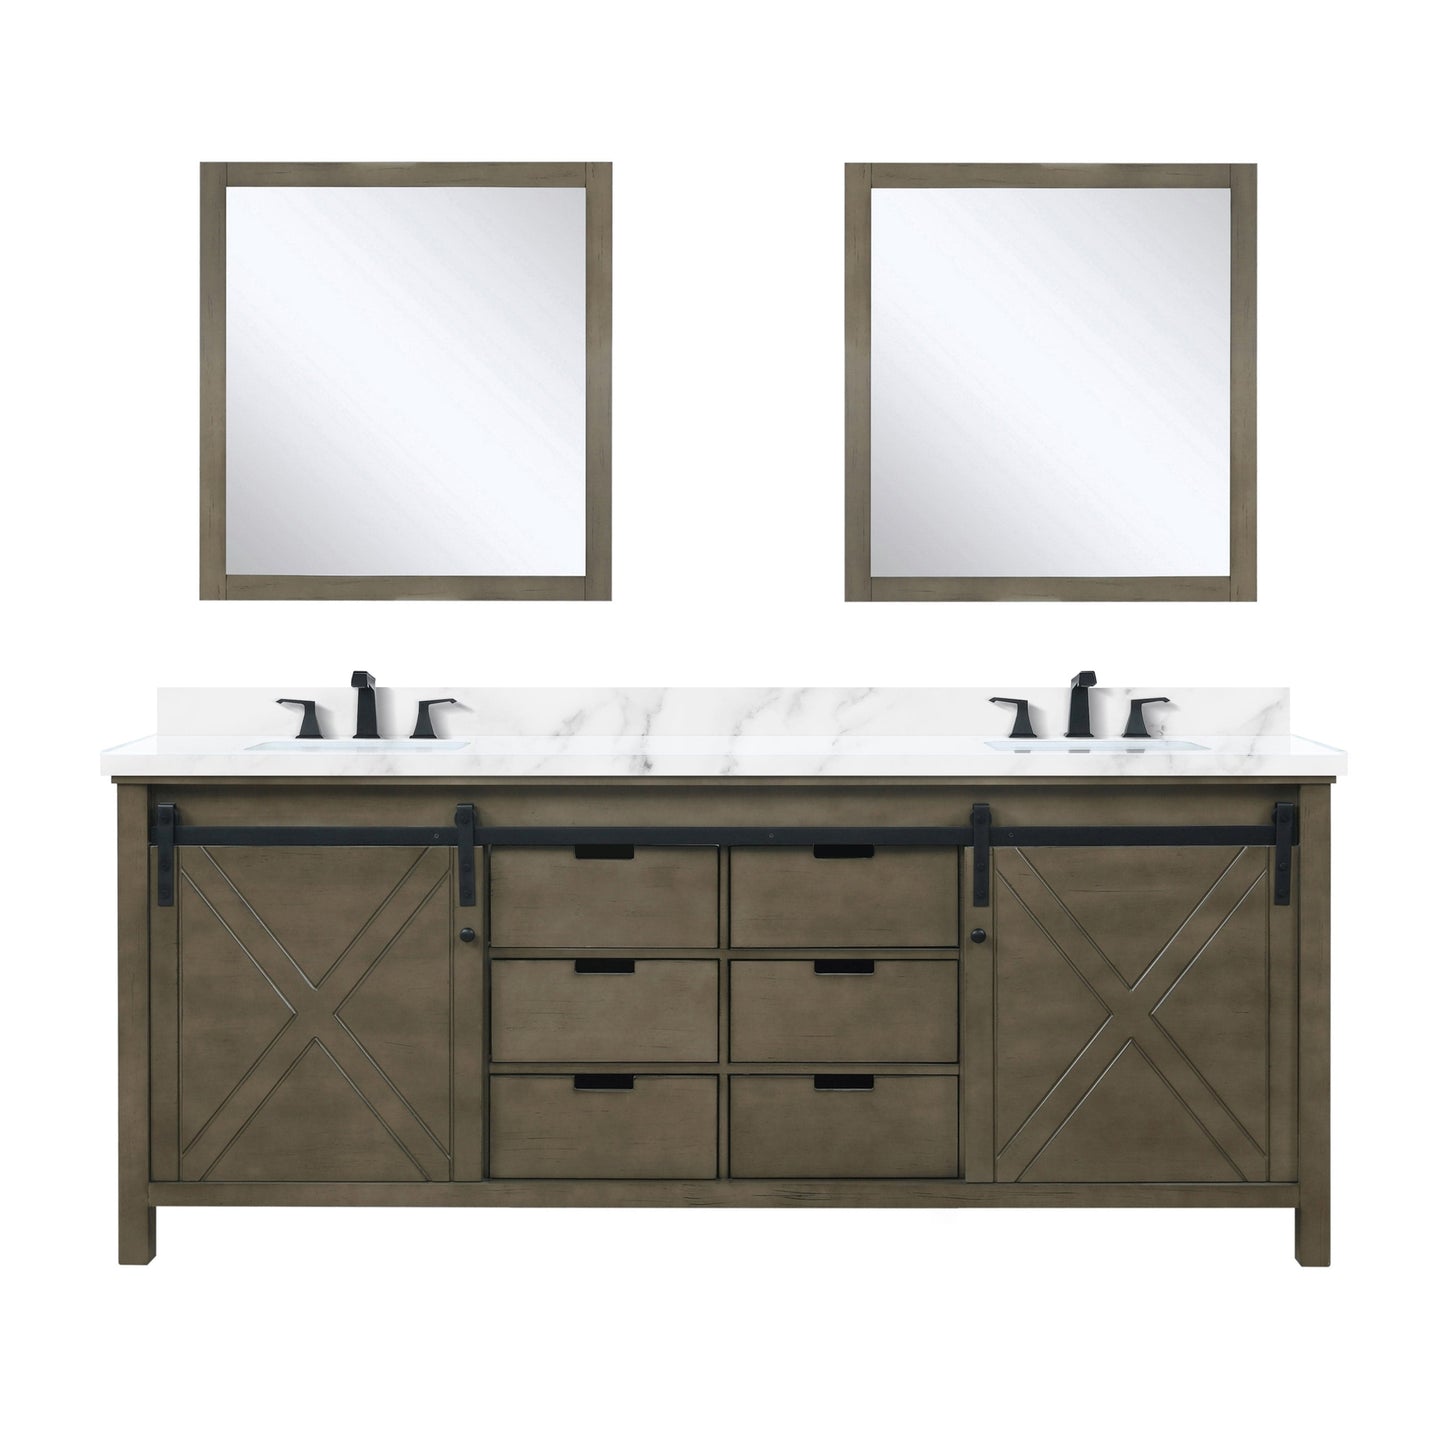 Bell + Modern Bathroom Vanity Ketchum 80" x 22" Double Bath Vanity